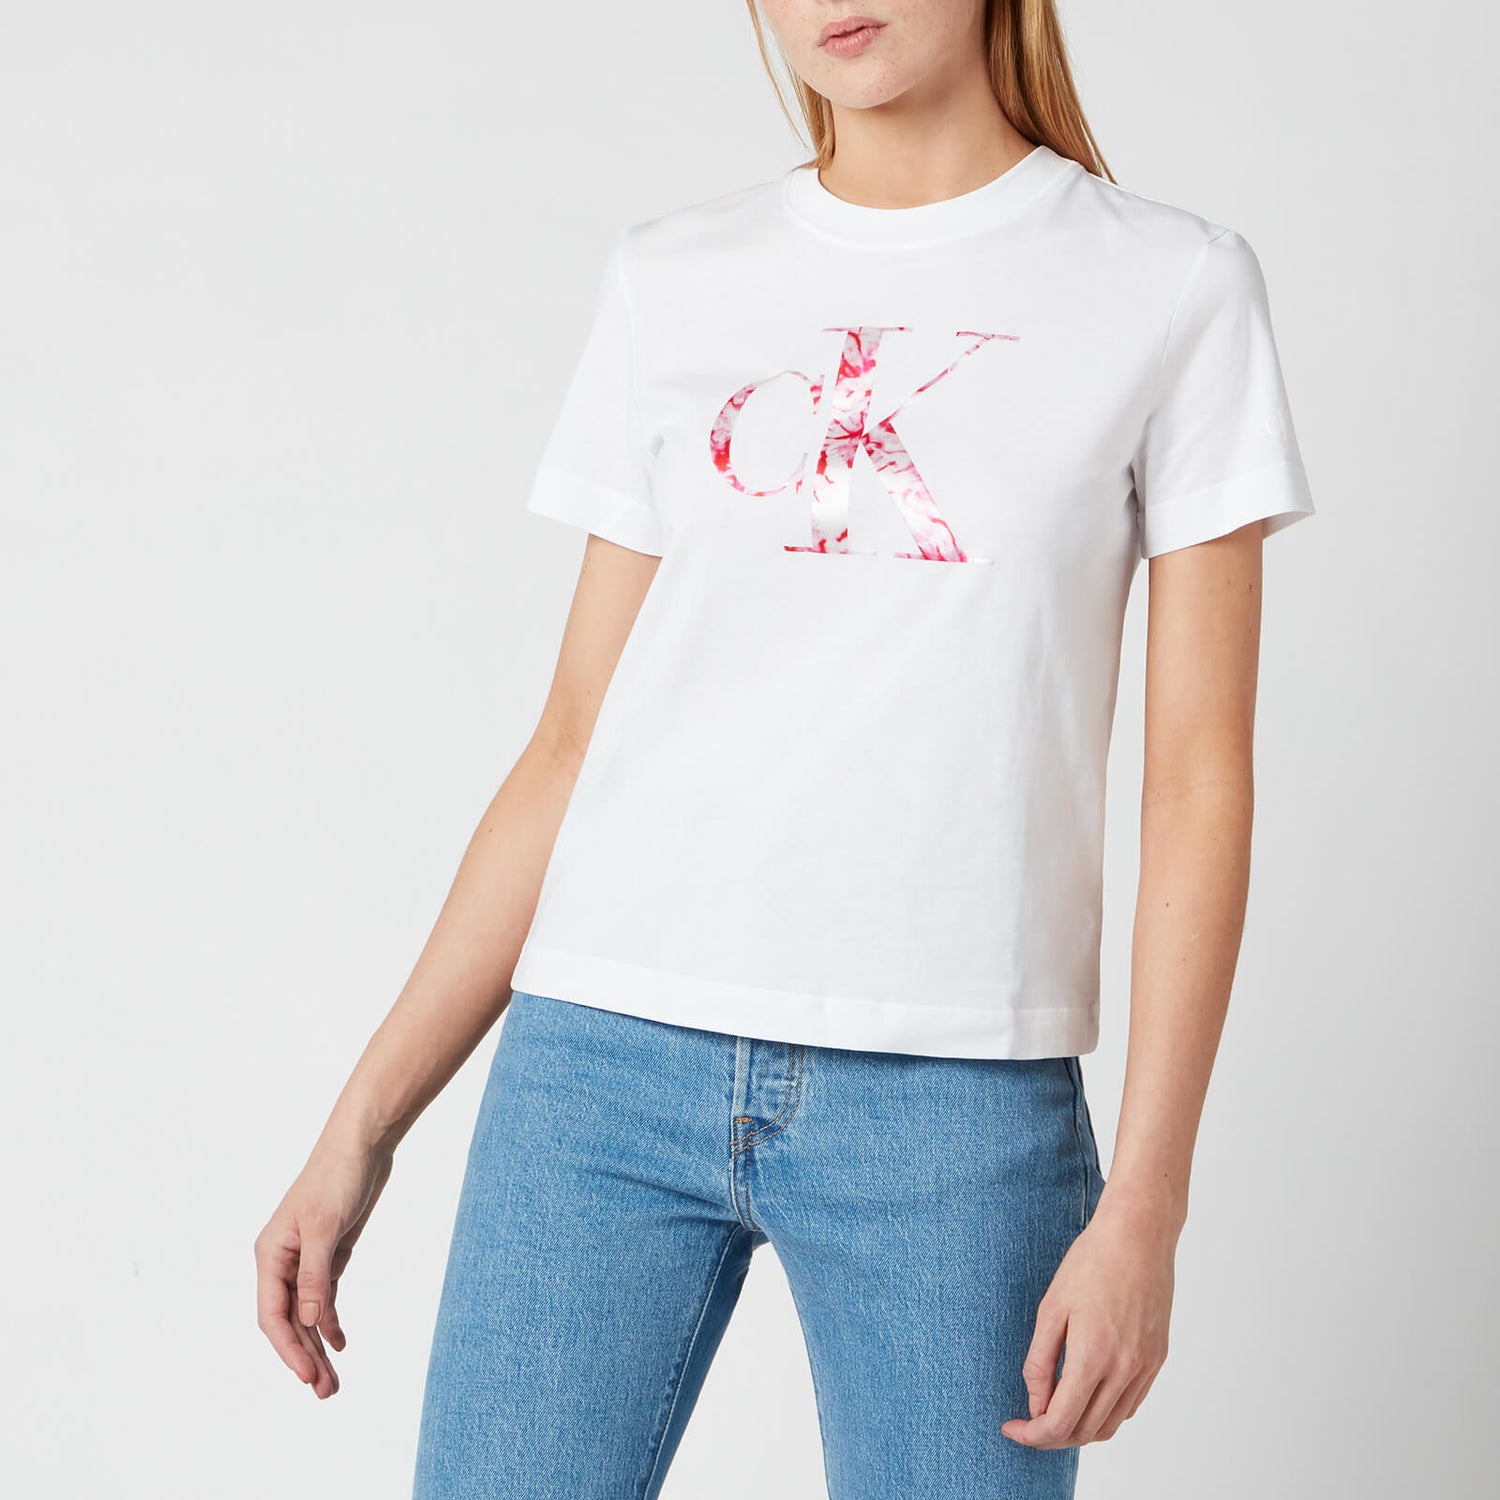 Calvin Klein Jeans Women's Satin Bonded Filled Ck T-Shirt - Bright White/Marble